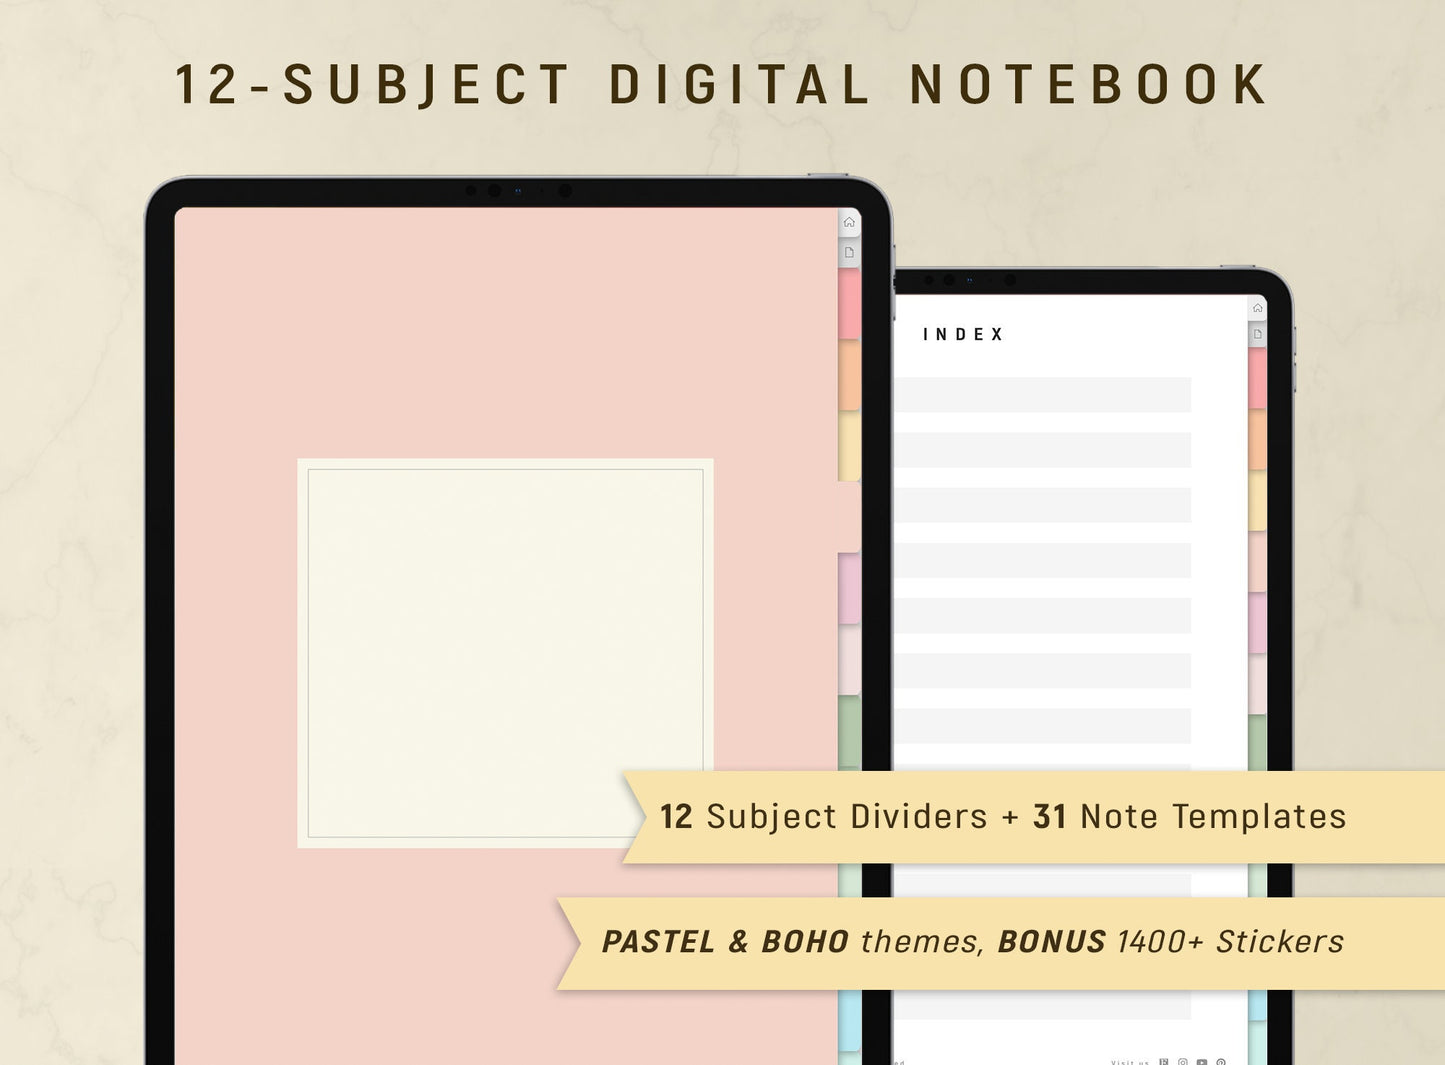 12-Subject Digital Notebook - Portrait Mode